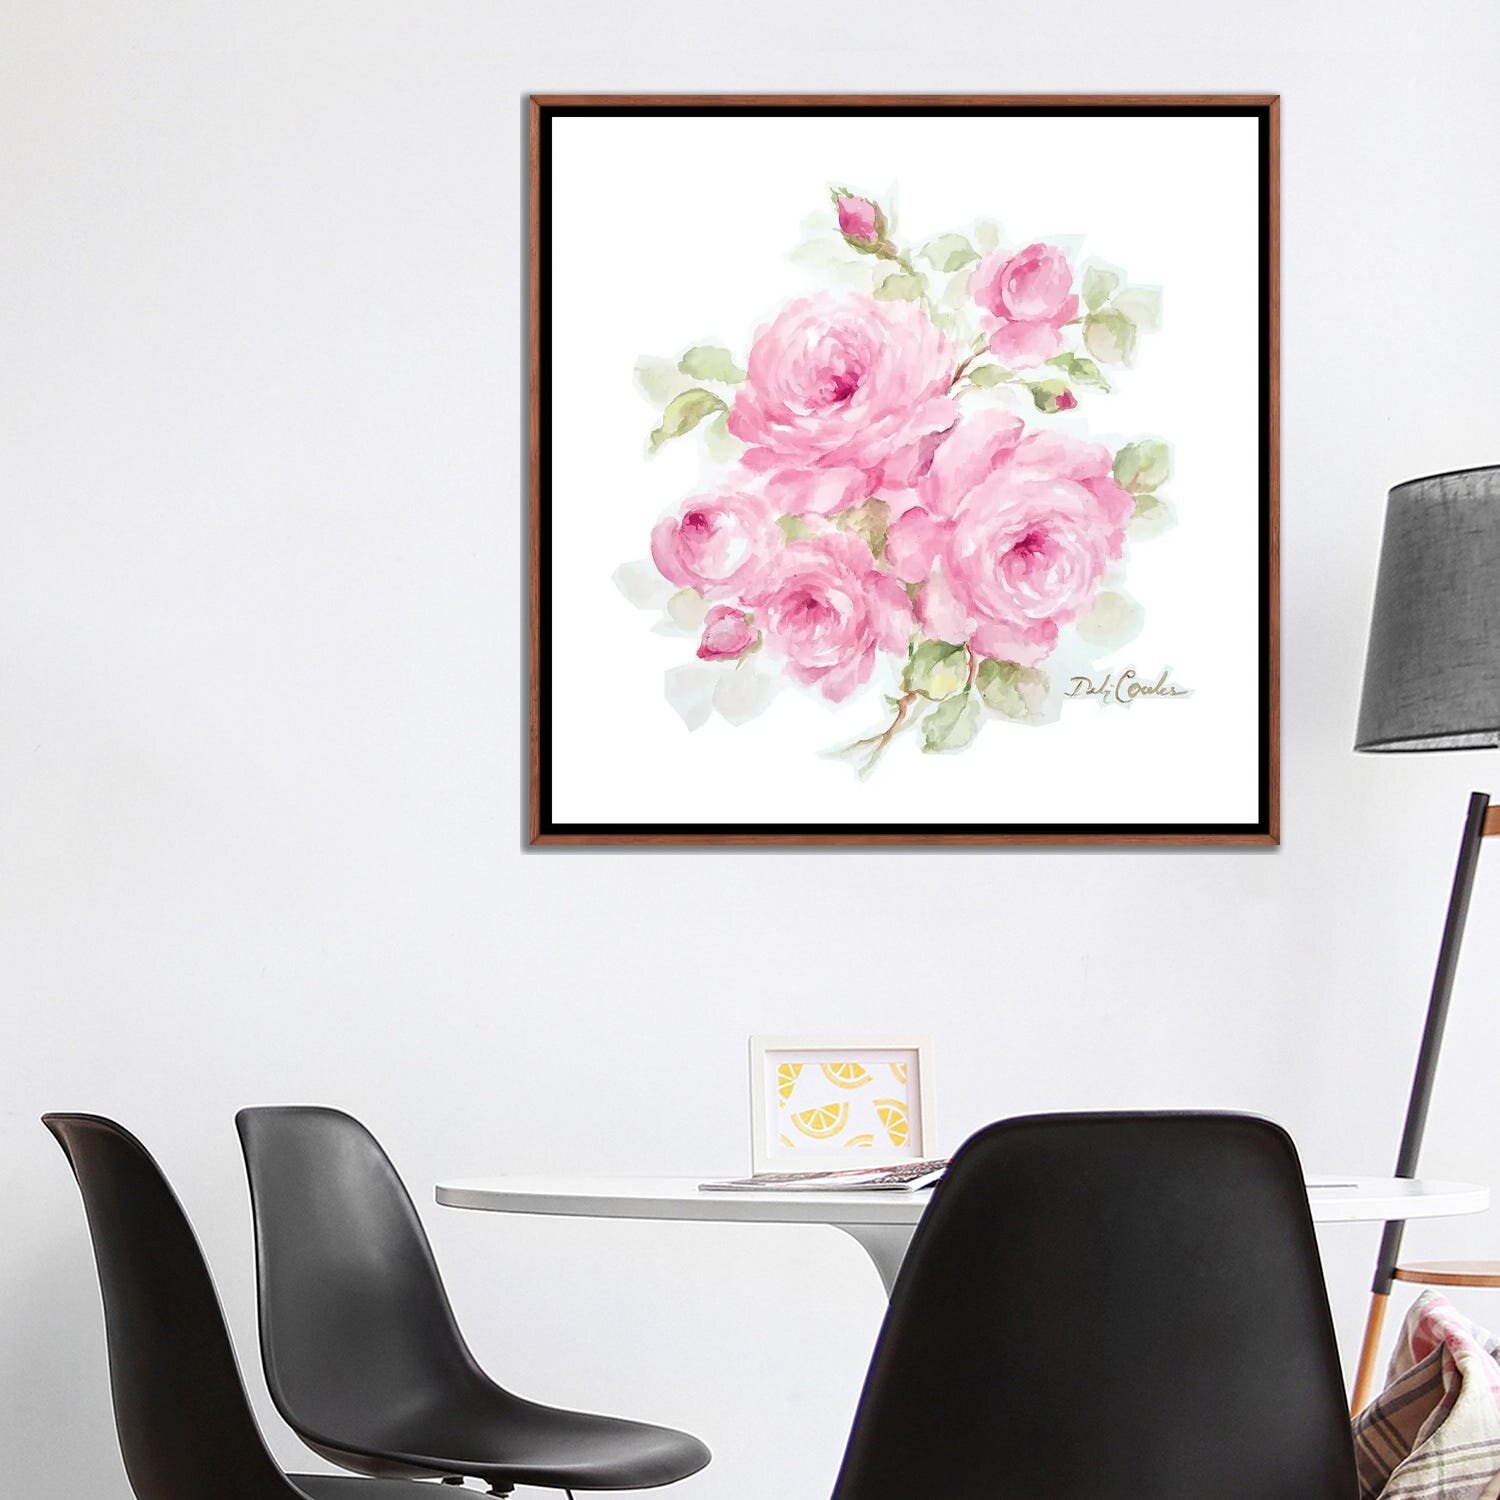 Bless international Romantic Roses Framed by Debi Coules Painting | Wayfair